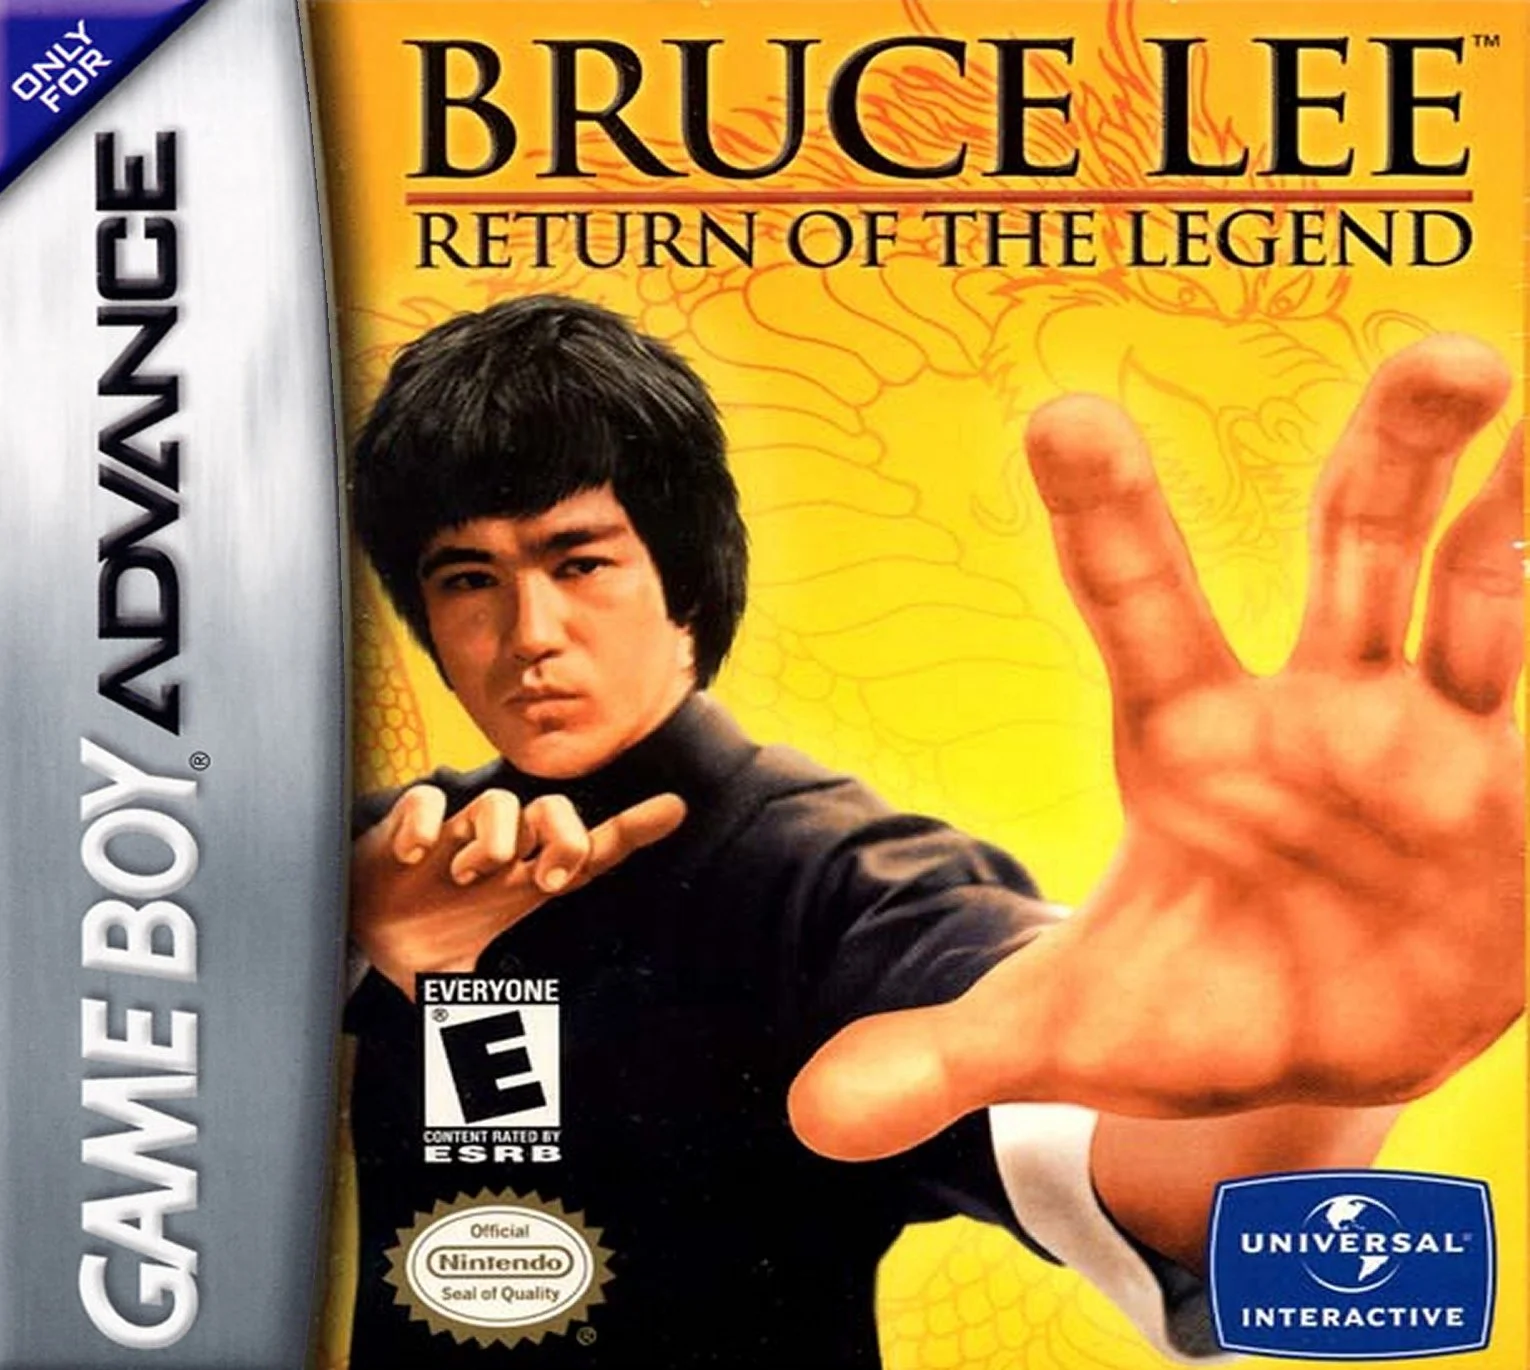 The legendary return. Геймбой Брюс ли. Гем бой Брюс ли обложка. Bruce Lee game boy Advance. Legend Returns.